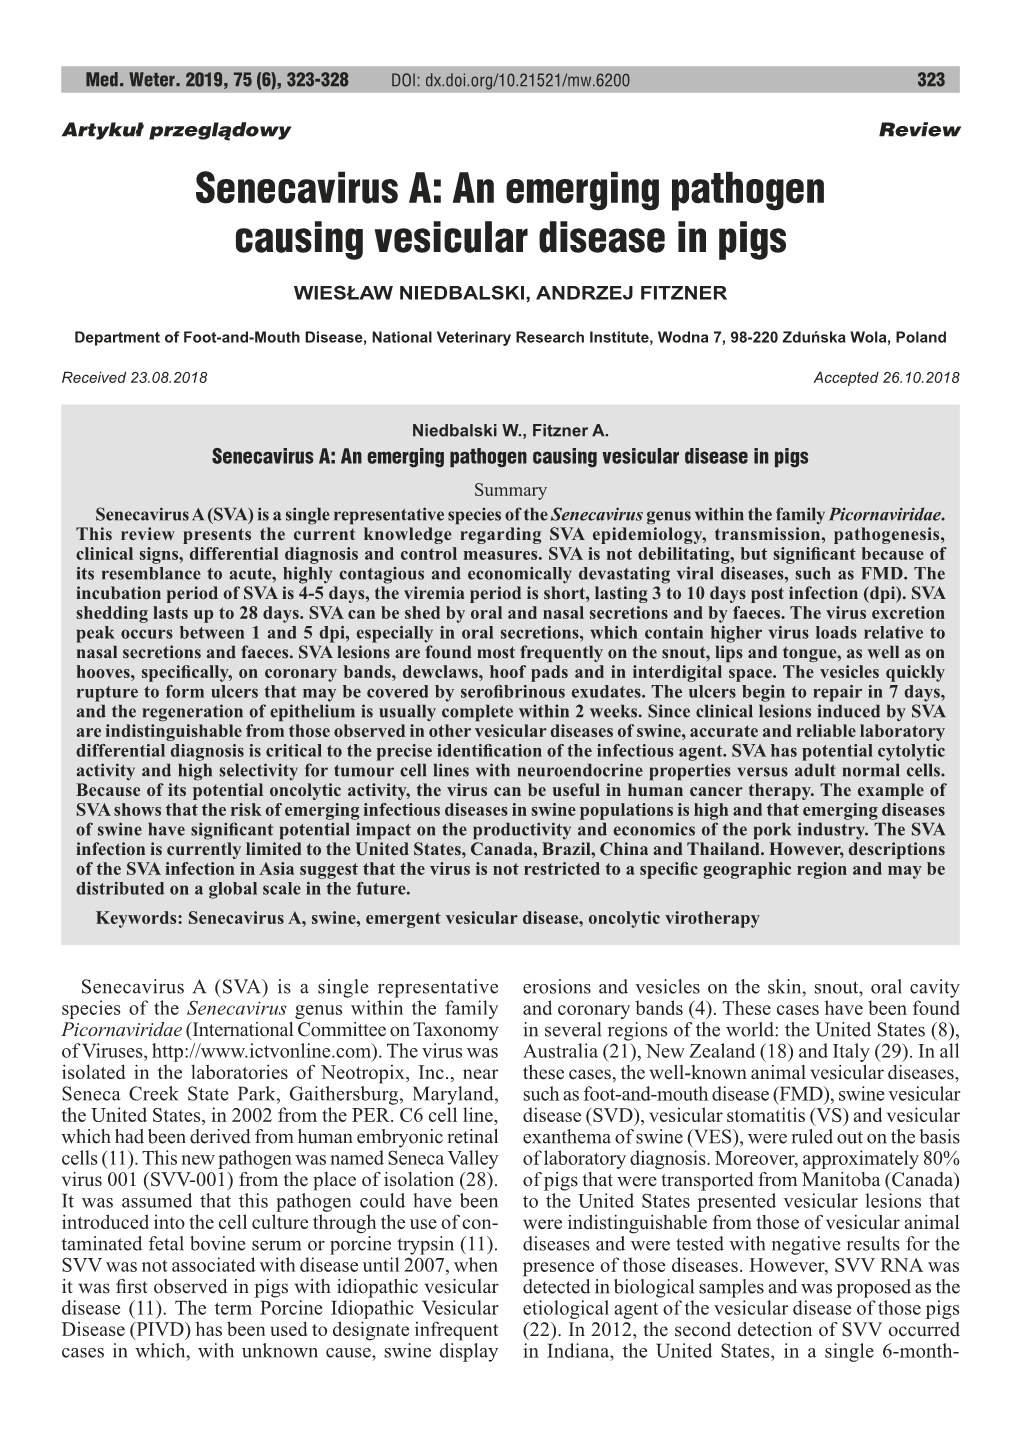 An Emerging Pathogen Causing Vesicular Disease in Pigs